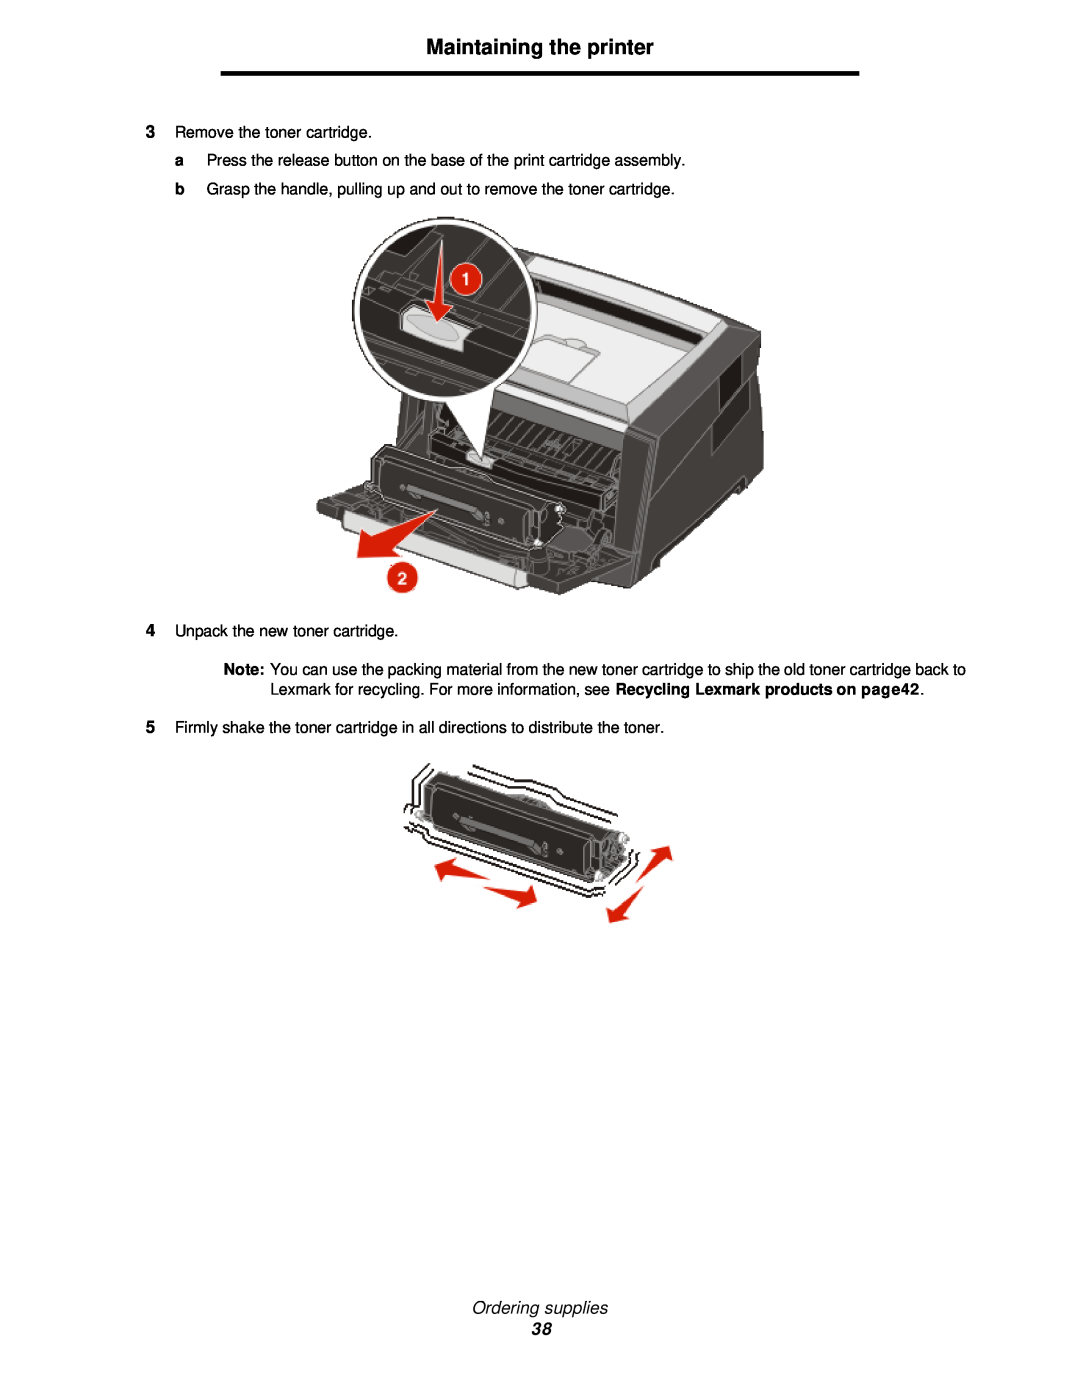 Lexmark 350d manual Maintaining the printer, Ordering supplies, Remove the toner cartridge 